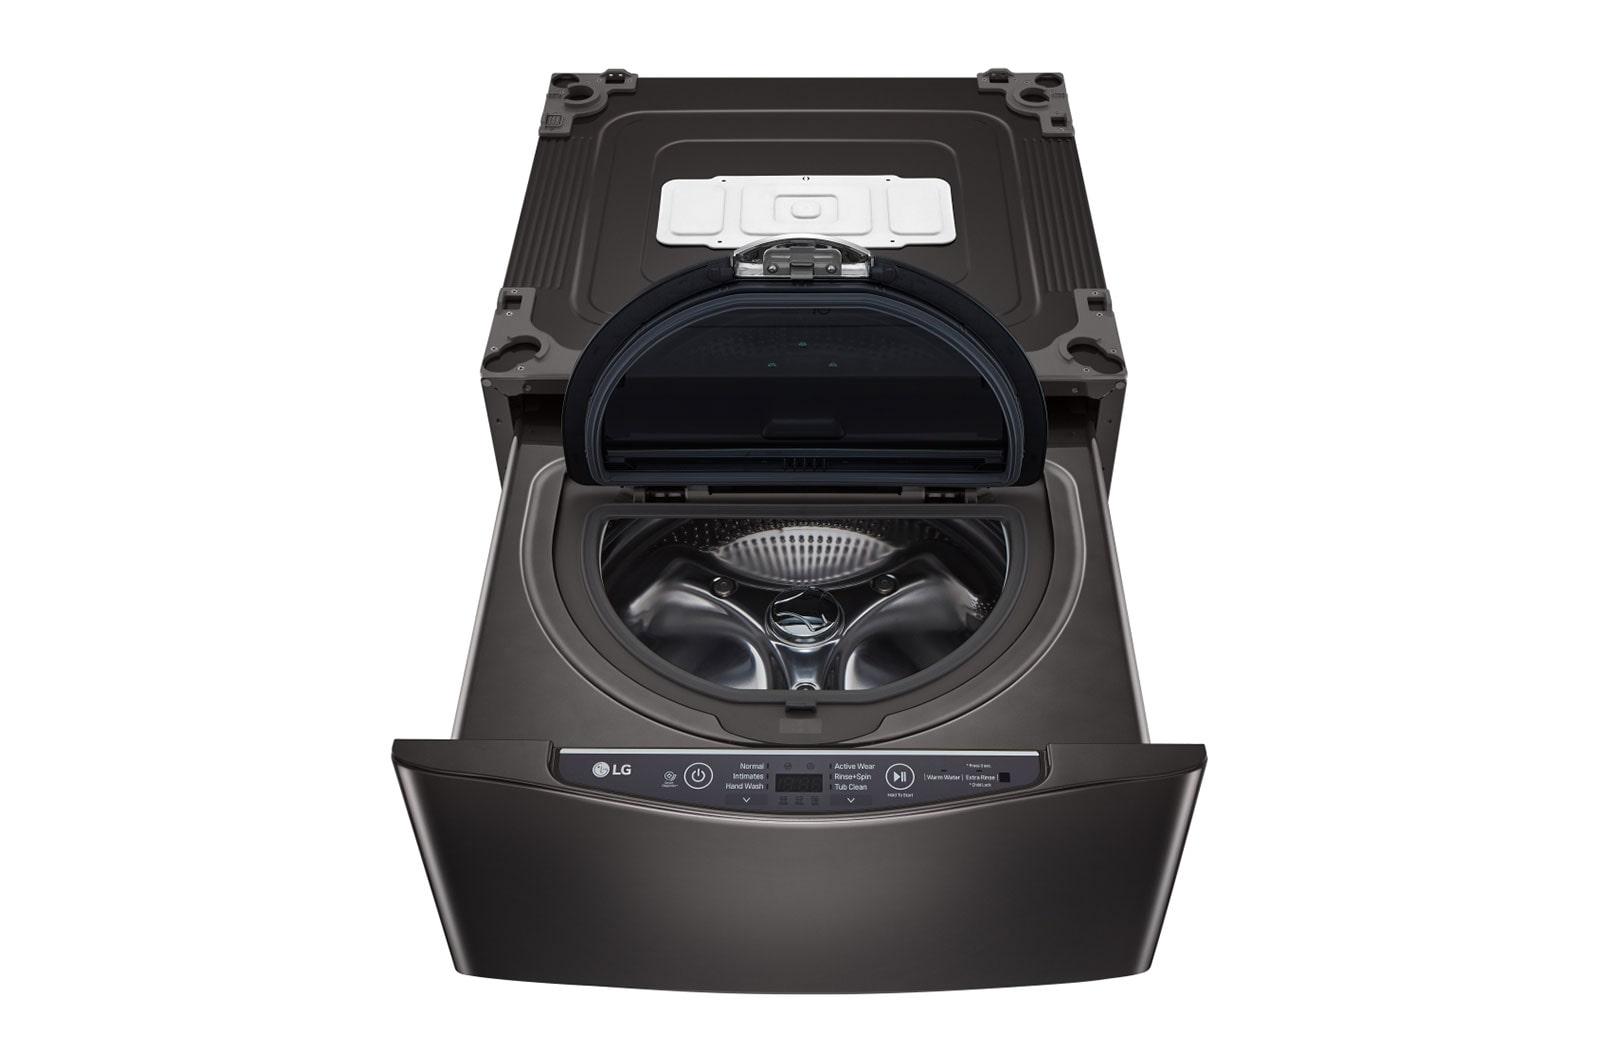 1.0 cu. ft. LG SideKick™ Pedestal Washer, LG TWINWash™ Compatible